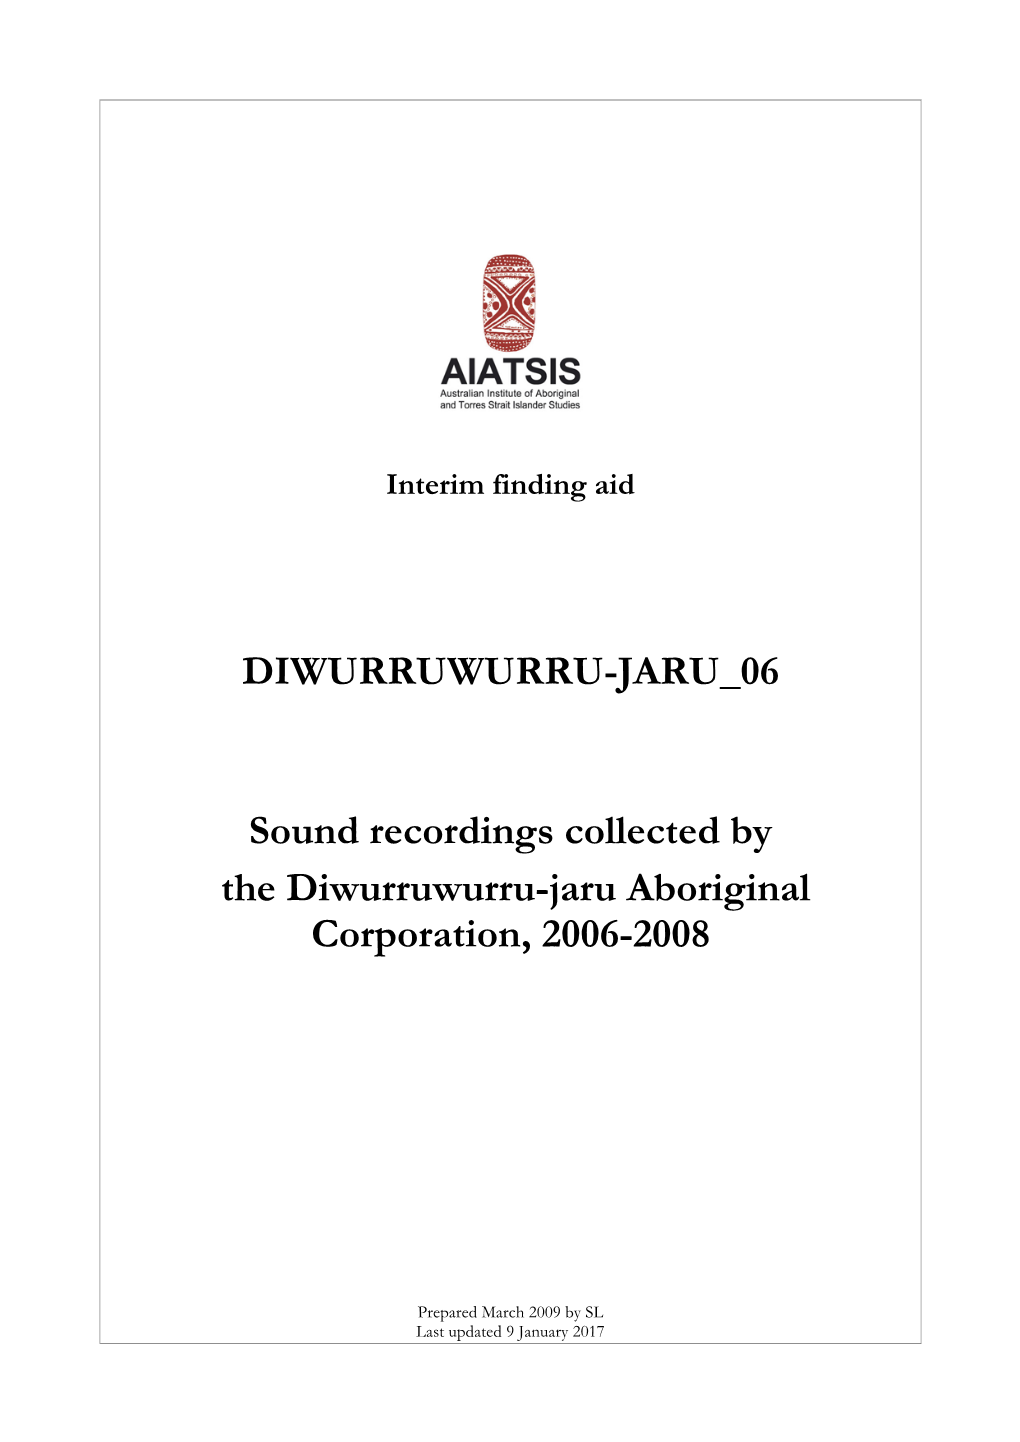 DIWURRUWURRU-JARU 06 Sound Recordings Collected by The